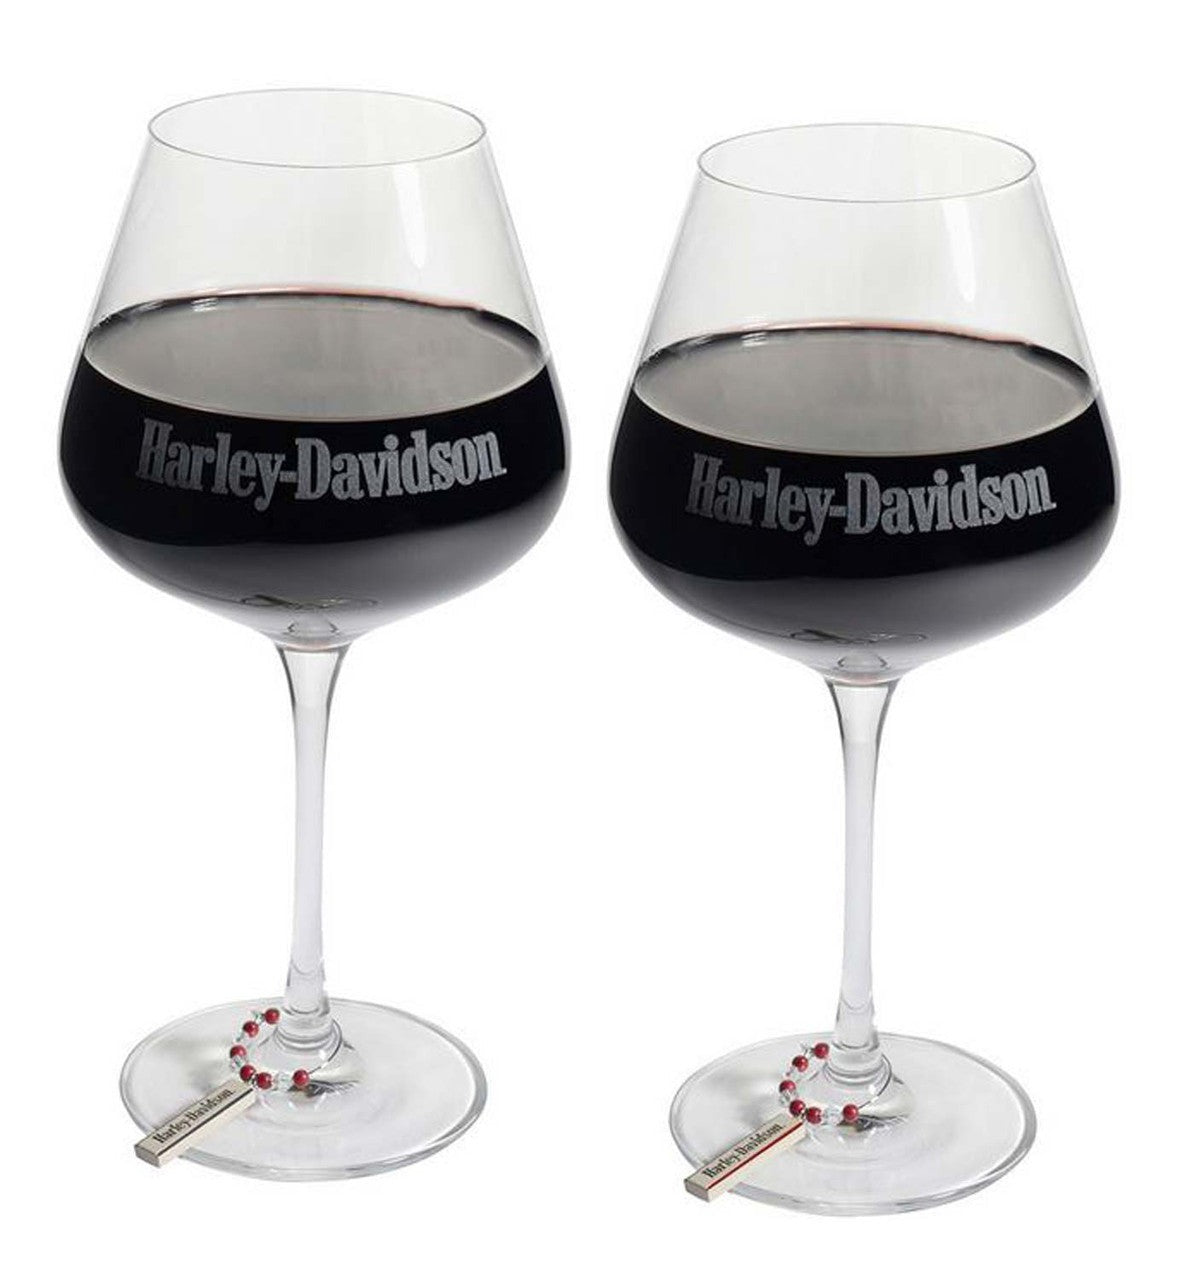 Harley-Davidson Wine Glass Set with Charms